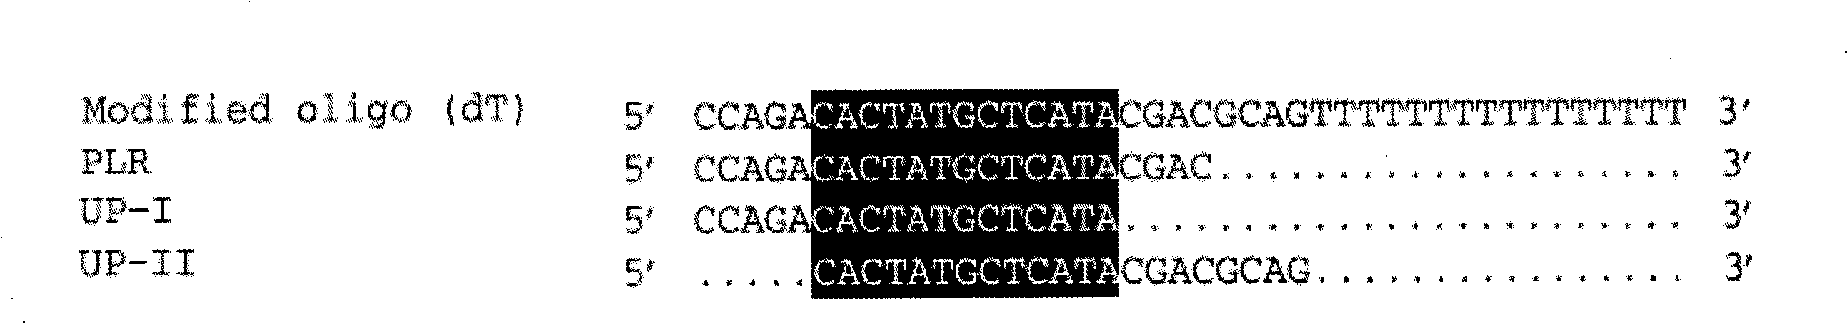 Clone method of SGAE label 3' end cDNA segment